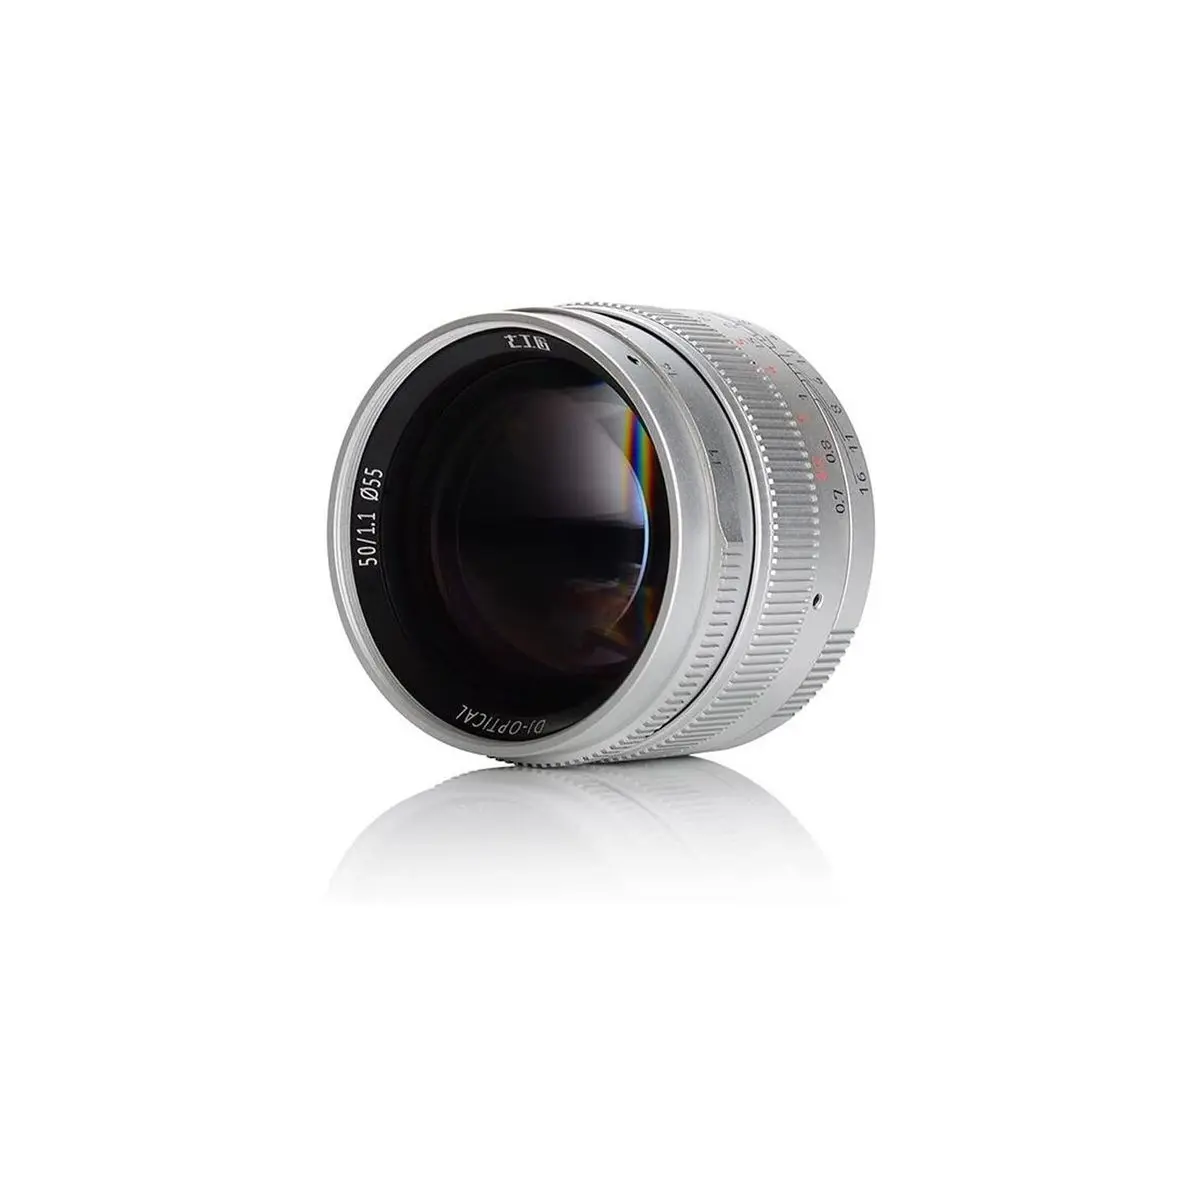 1. 7Artisans 50mm F1.1 (TL/SL) Silver (A402S) Lens